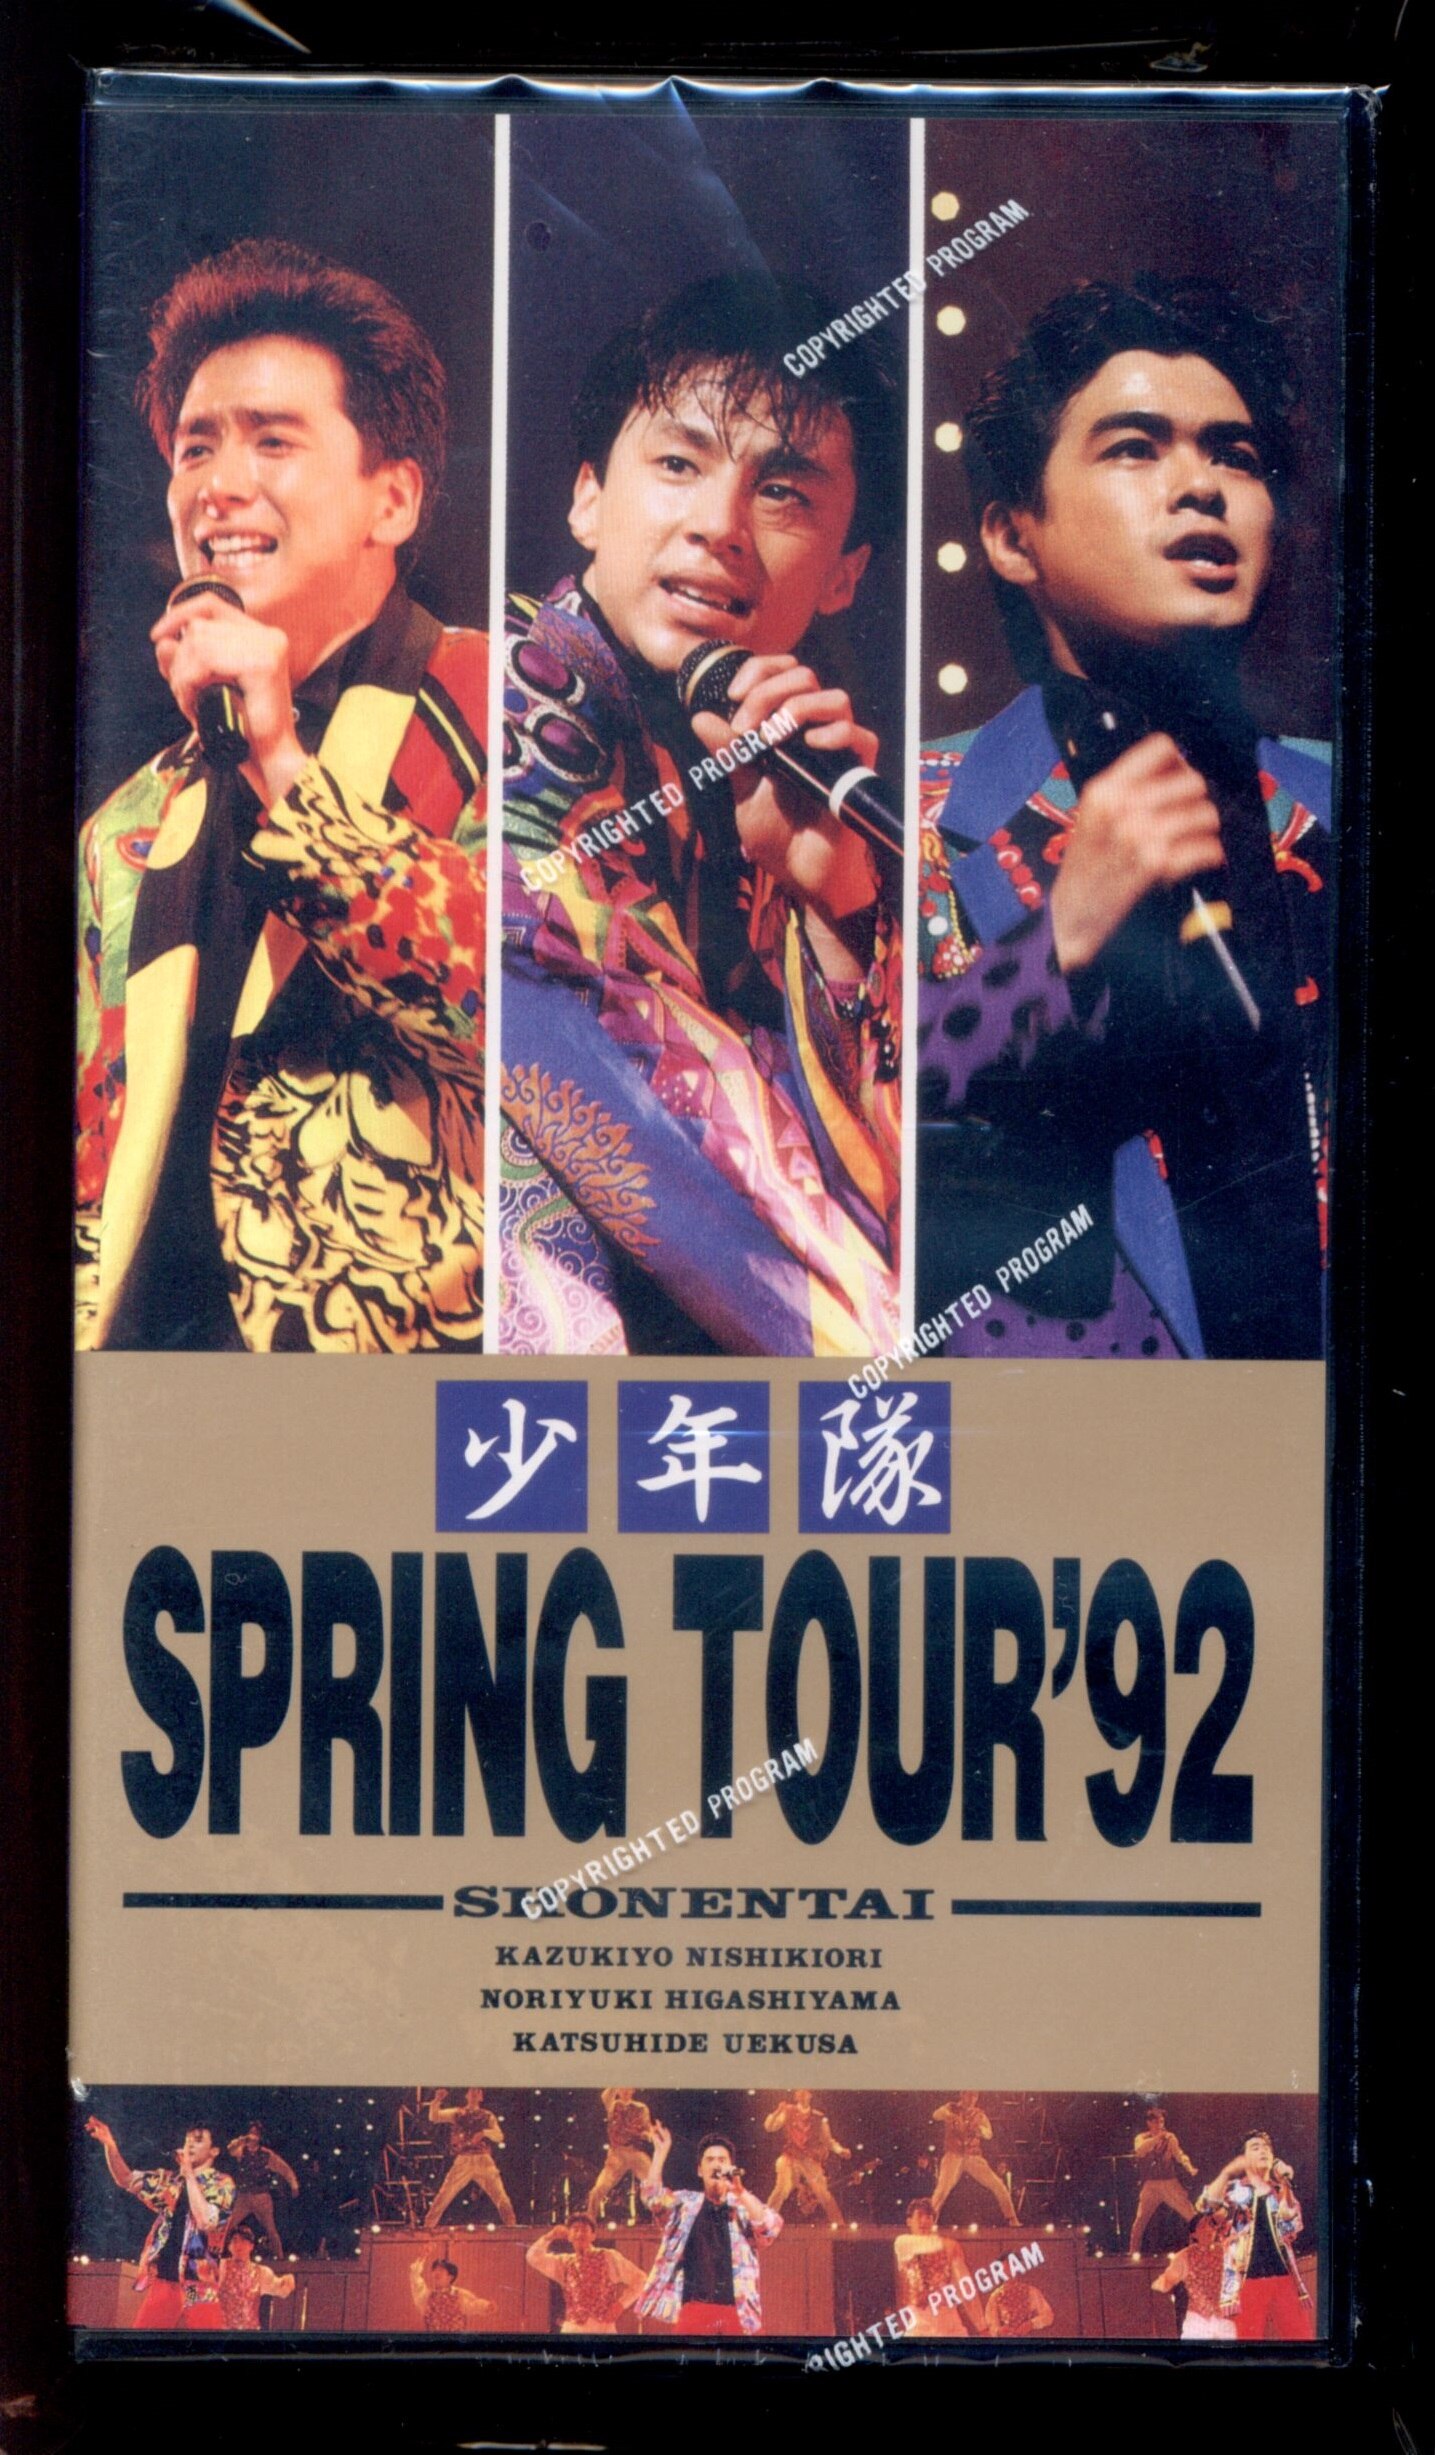 完全生産限定盤 少年隊 spring tour 92 dvd | www.takalamtech.com